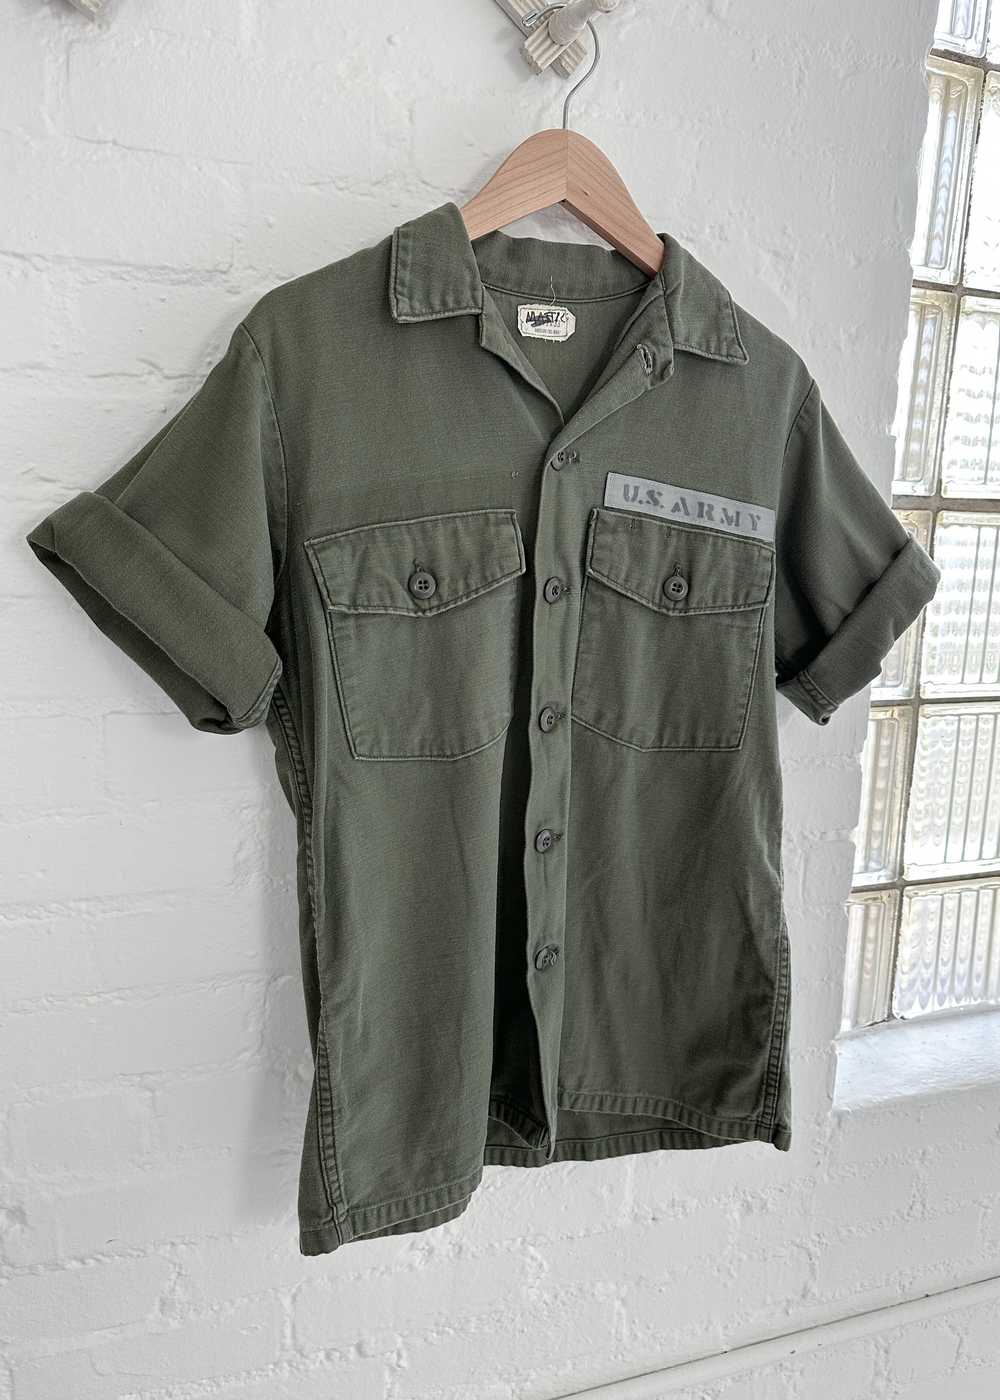 Vintage 1970s Short Sleeve Army Jacket - image 2